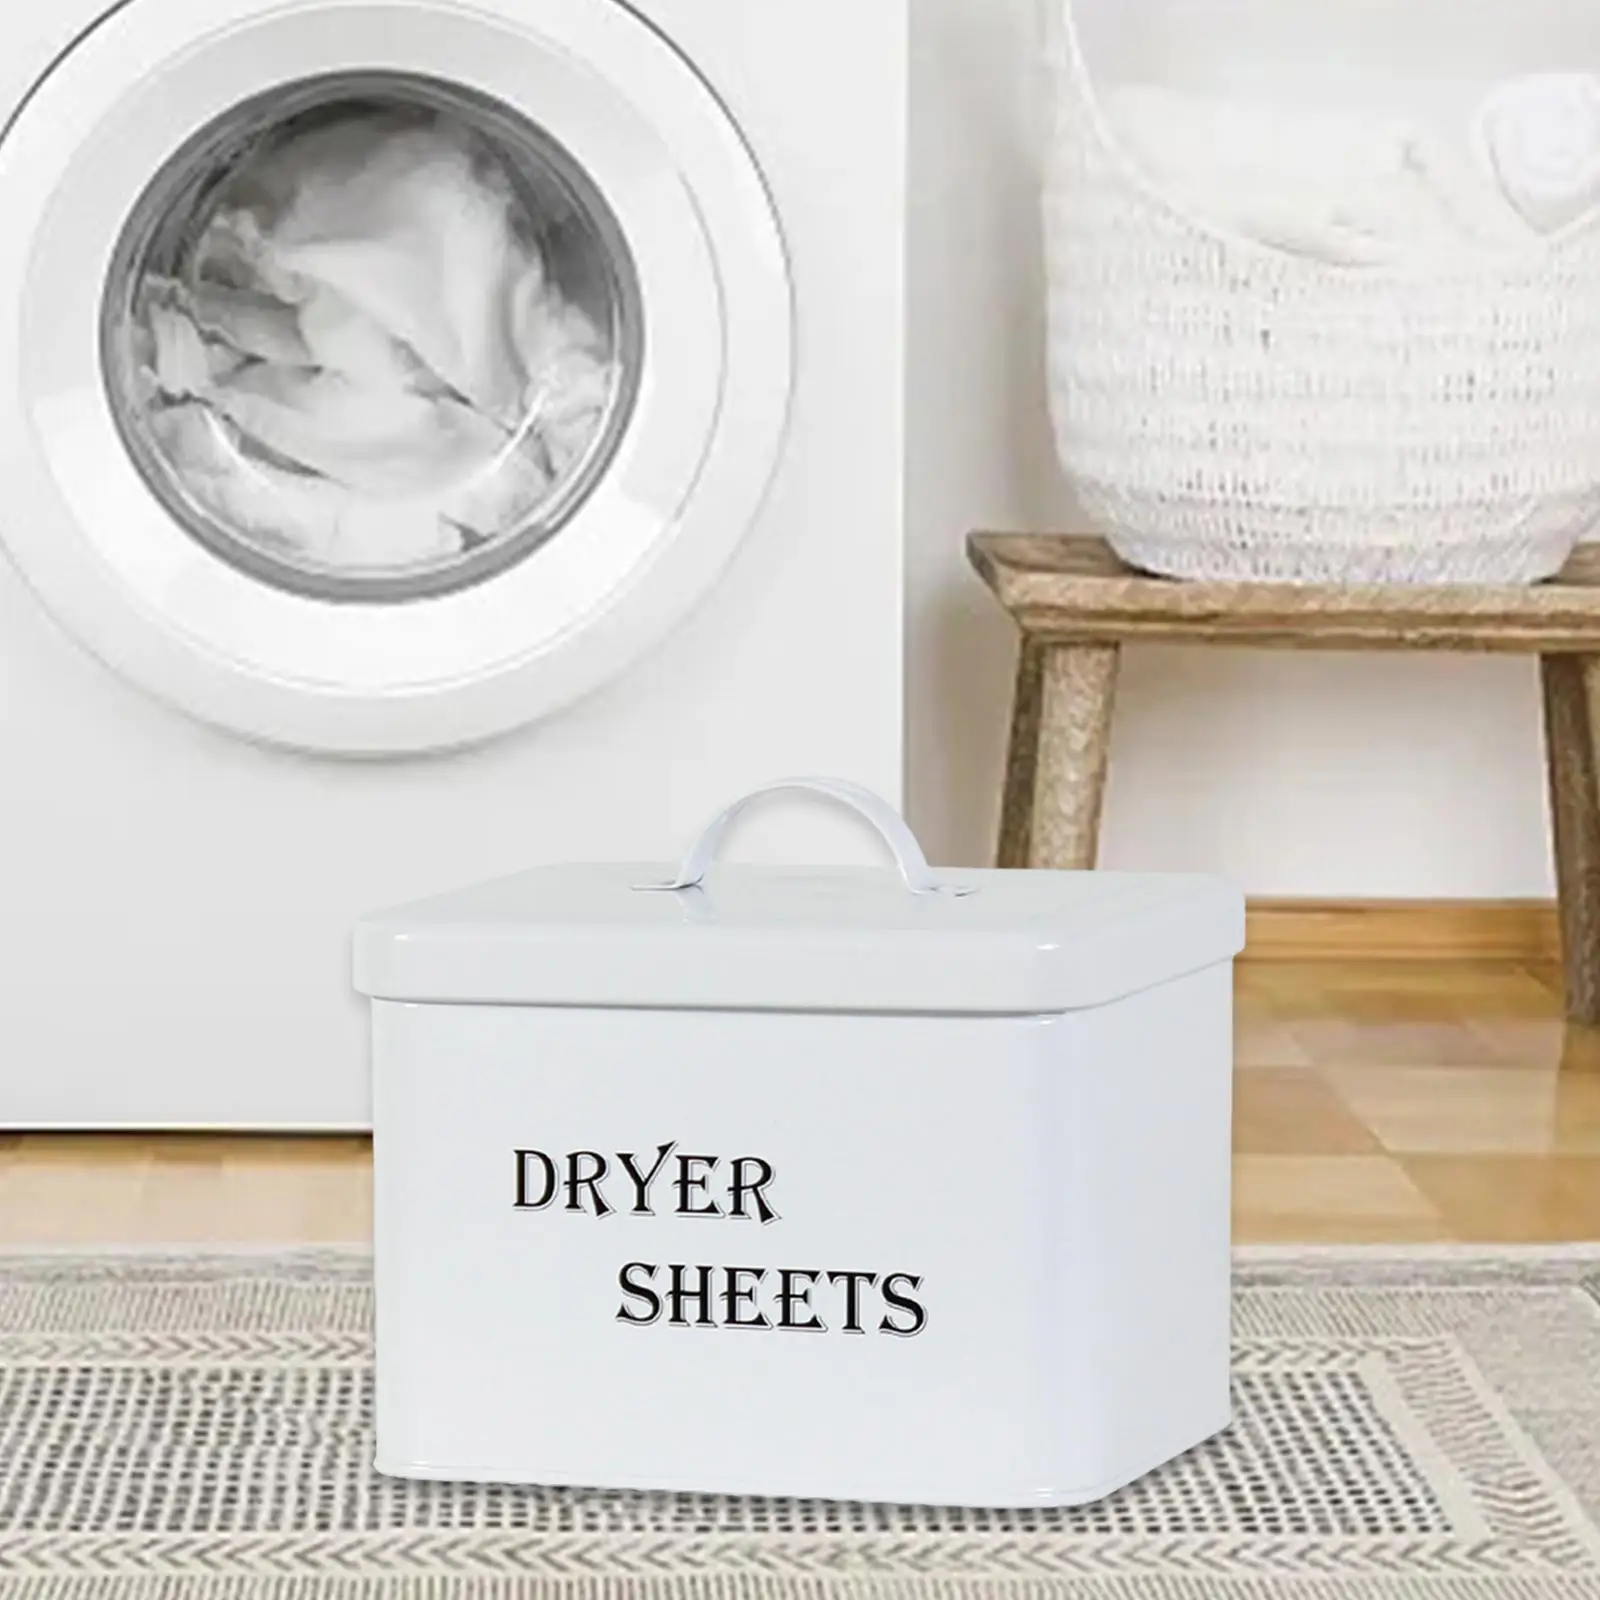 Dryer Sheet Container Dryer Sheet Bin Modern Dustproof Dryer Sheet Holder for Room Organization Laundry Room Home Bathroom Dorm